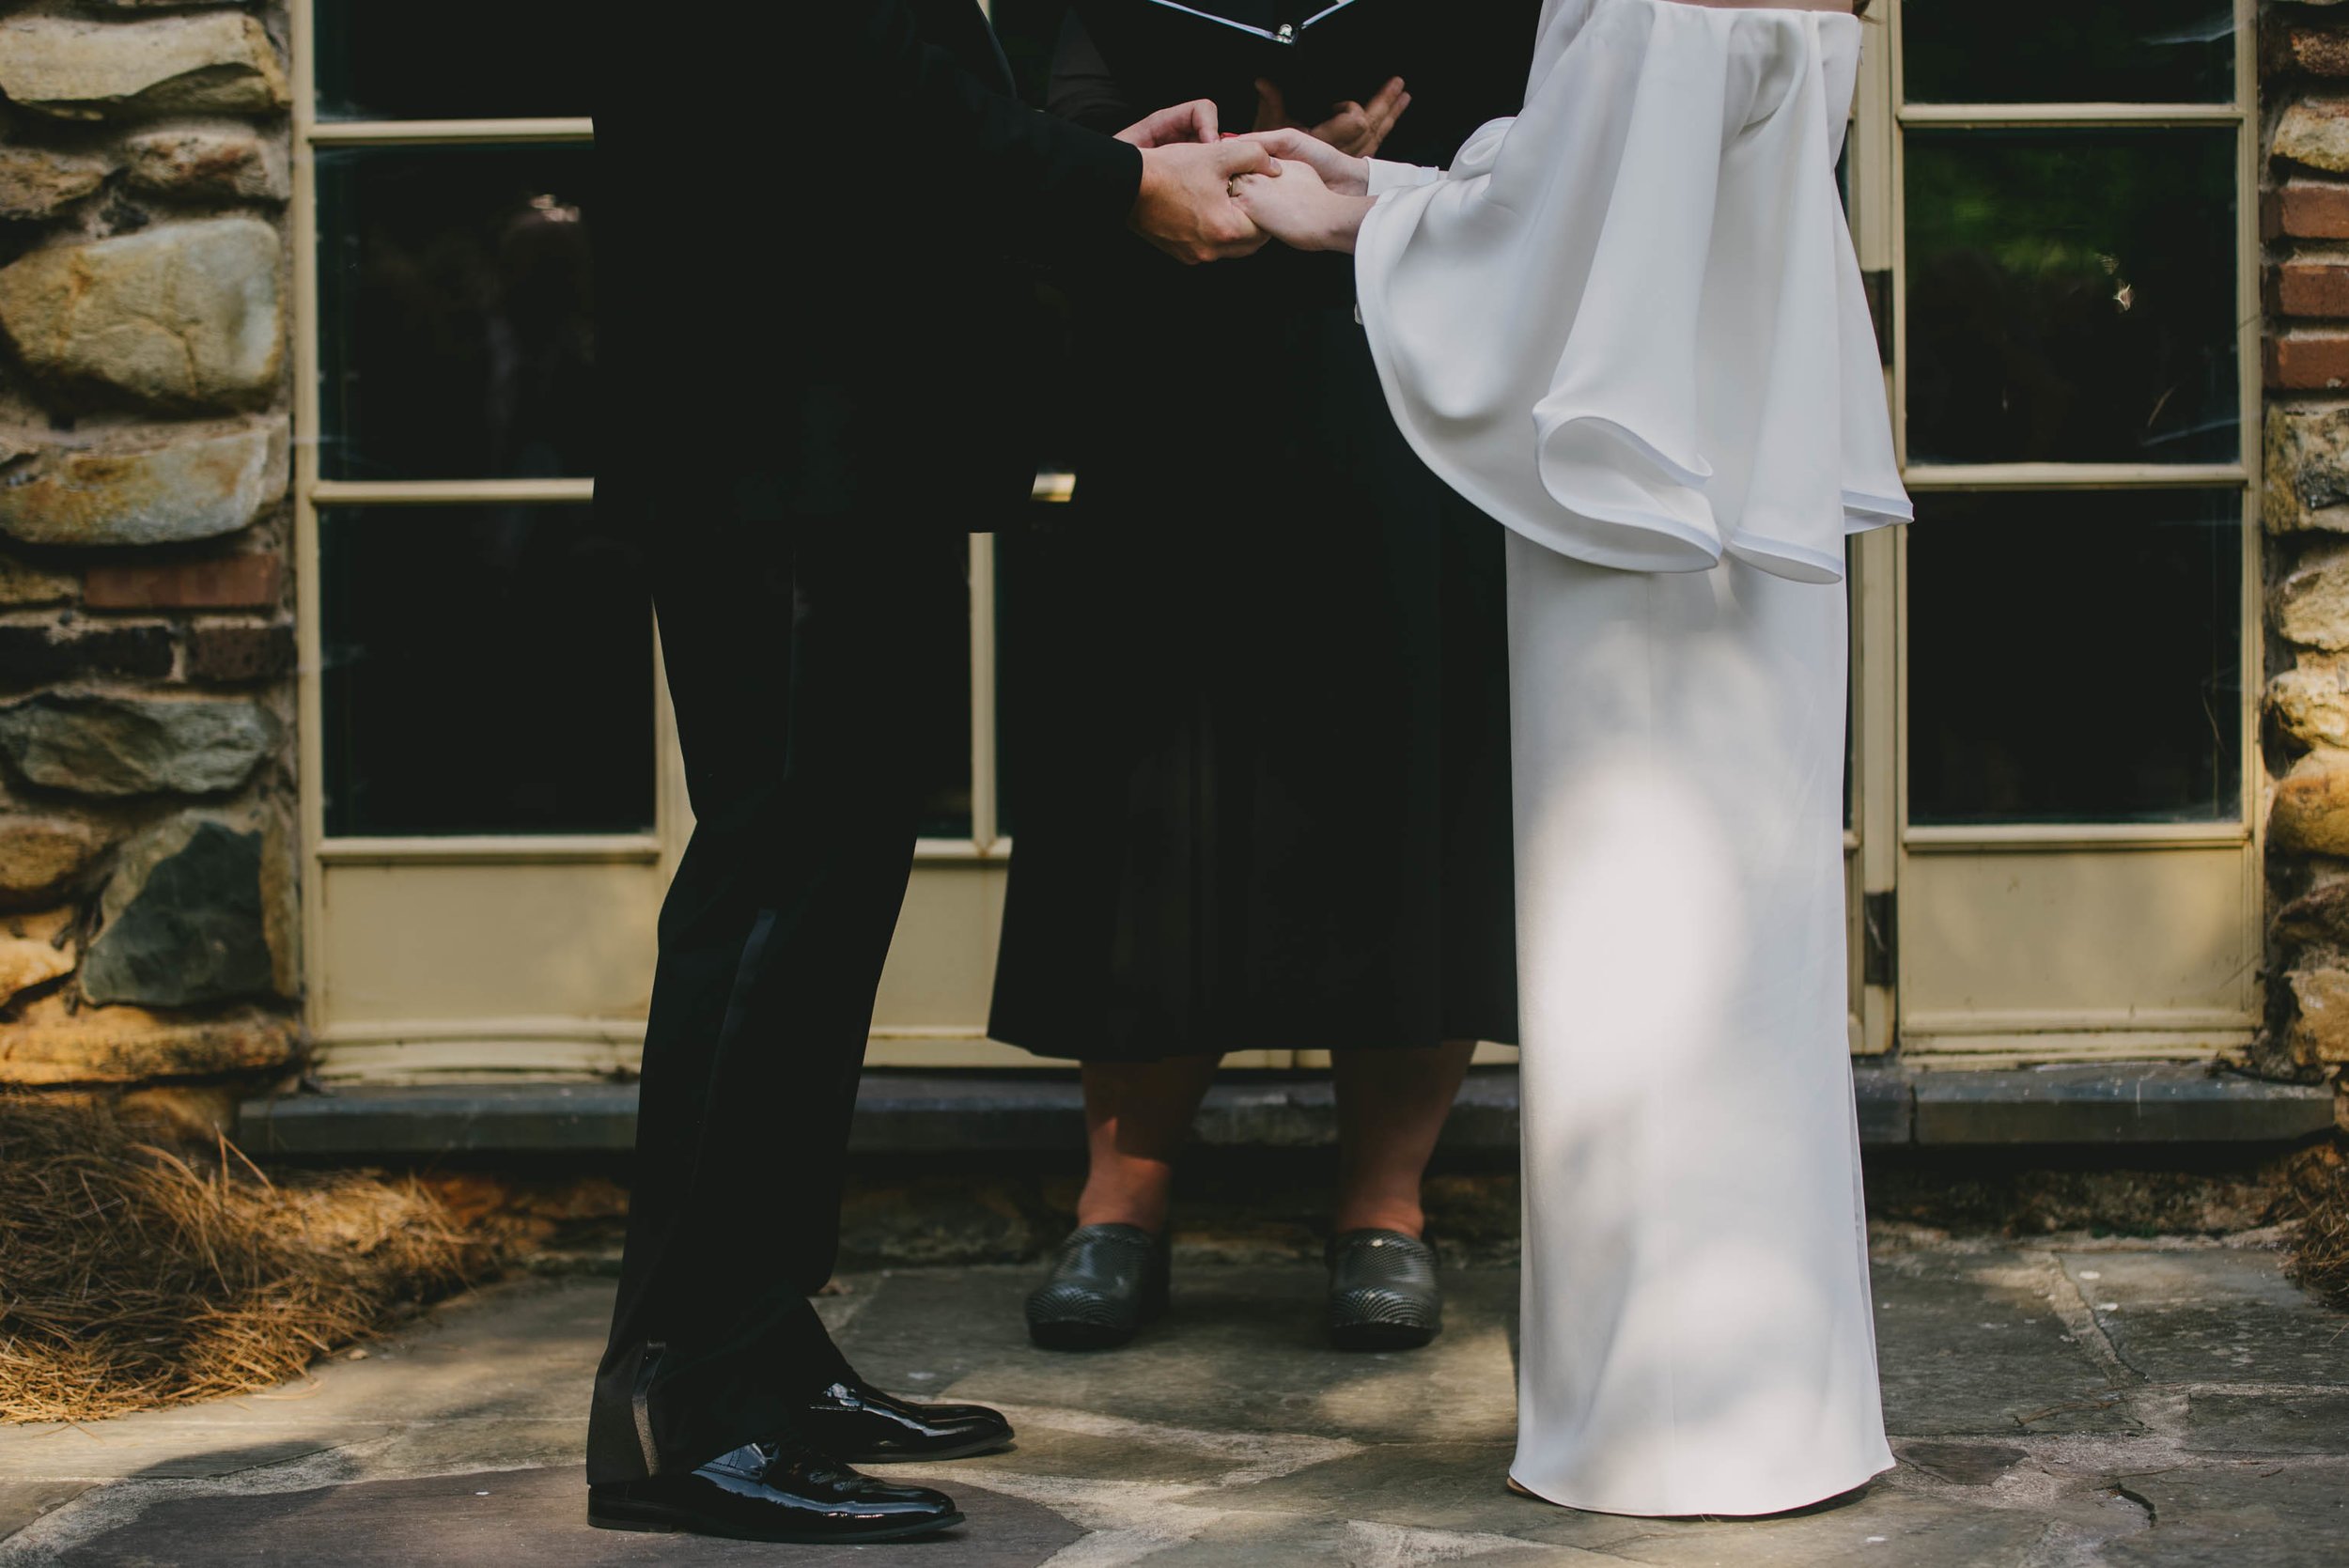 houghton-bride-and-her-groom-photo-exchanging-rings.jpg